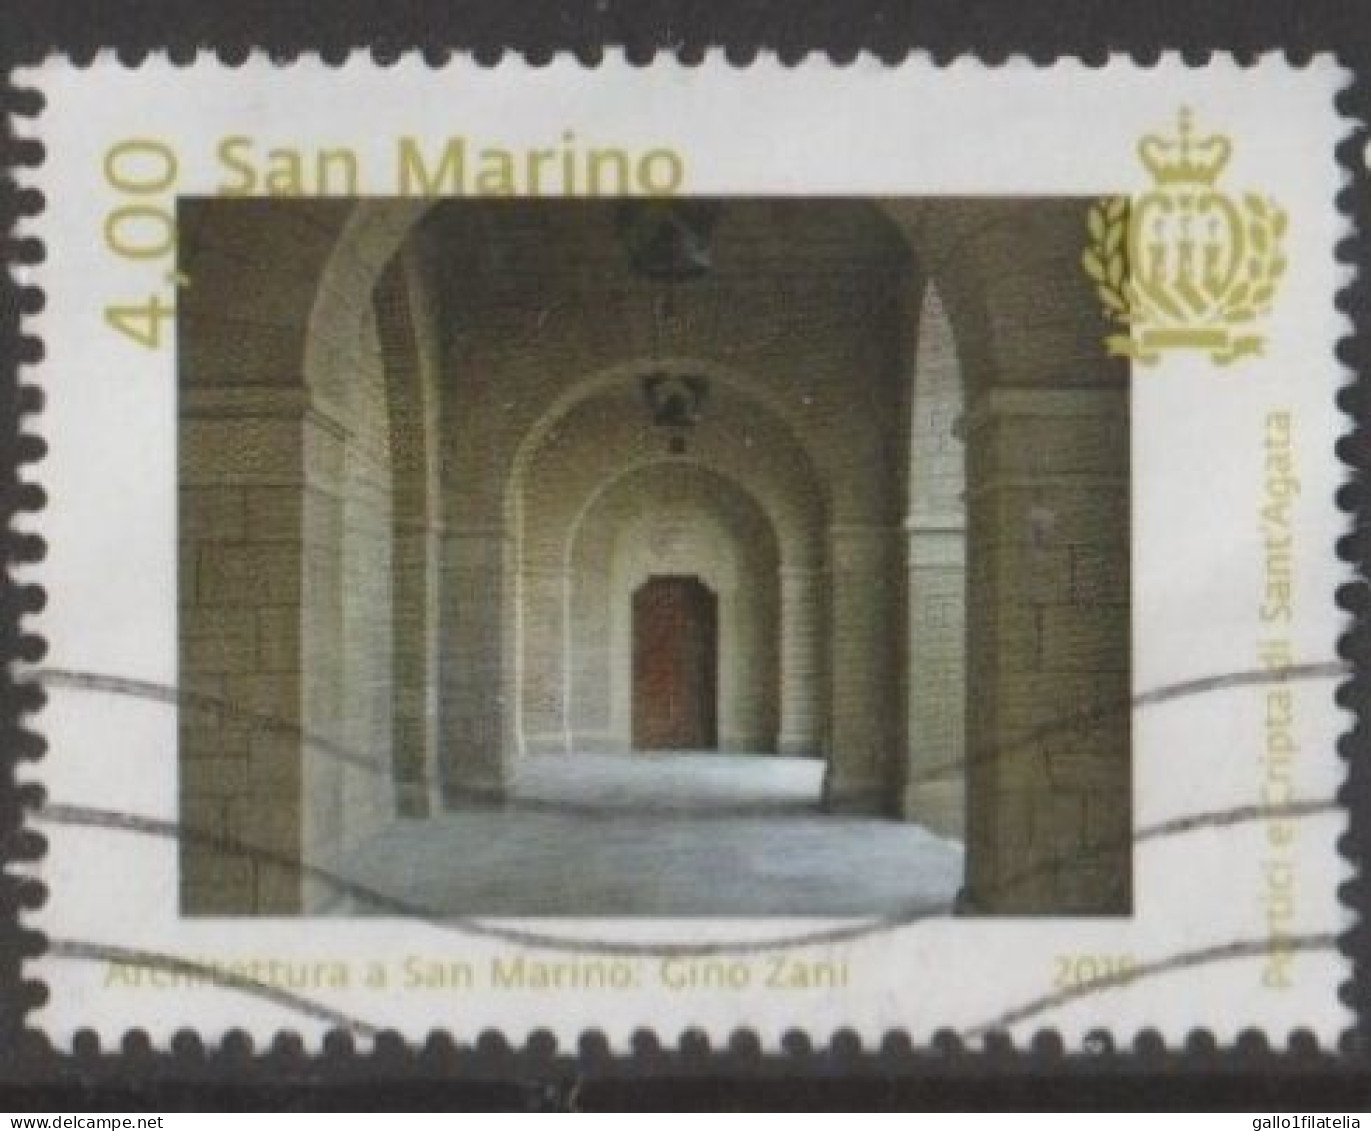 2015 - SAN MARINO - ARCHITETTURA A SAN MARINO / ARCHITECTURE IN SAN MARINO - USATO. - Usados